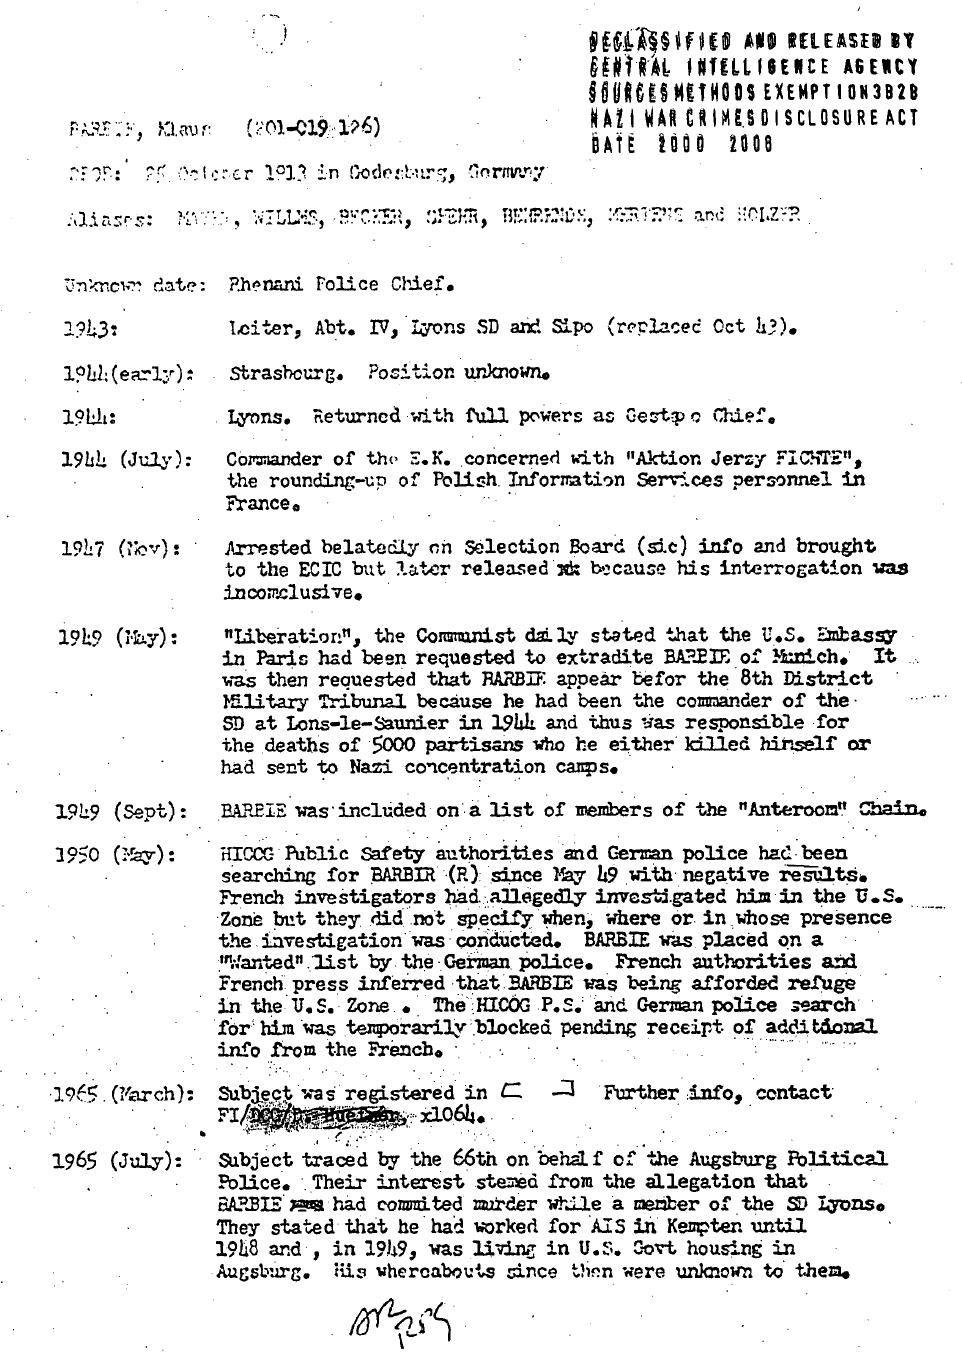 Klaus Barbie CIA Files Page 2